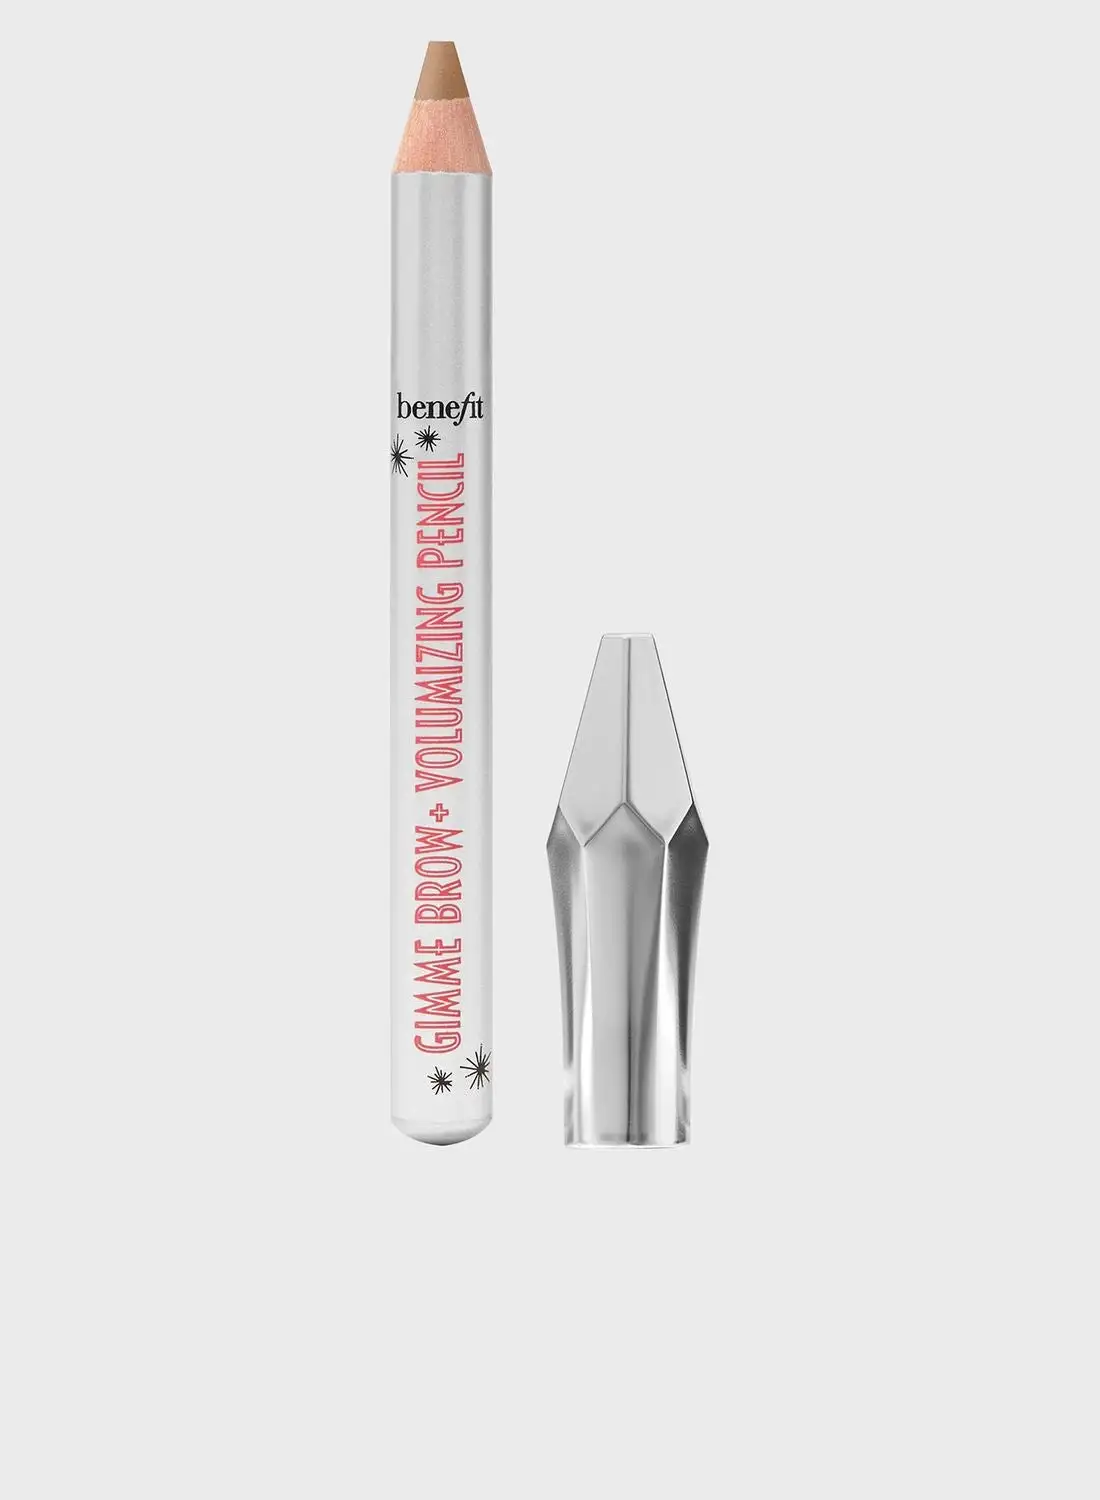 Benefit Cosmetics Gimme Brow + قلم تكثيف الحواجب - قلم تكثيف الحواجب - صغير - 04 بني داكن دافئ